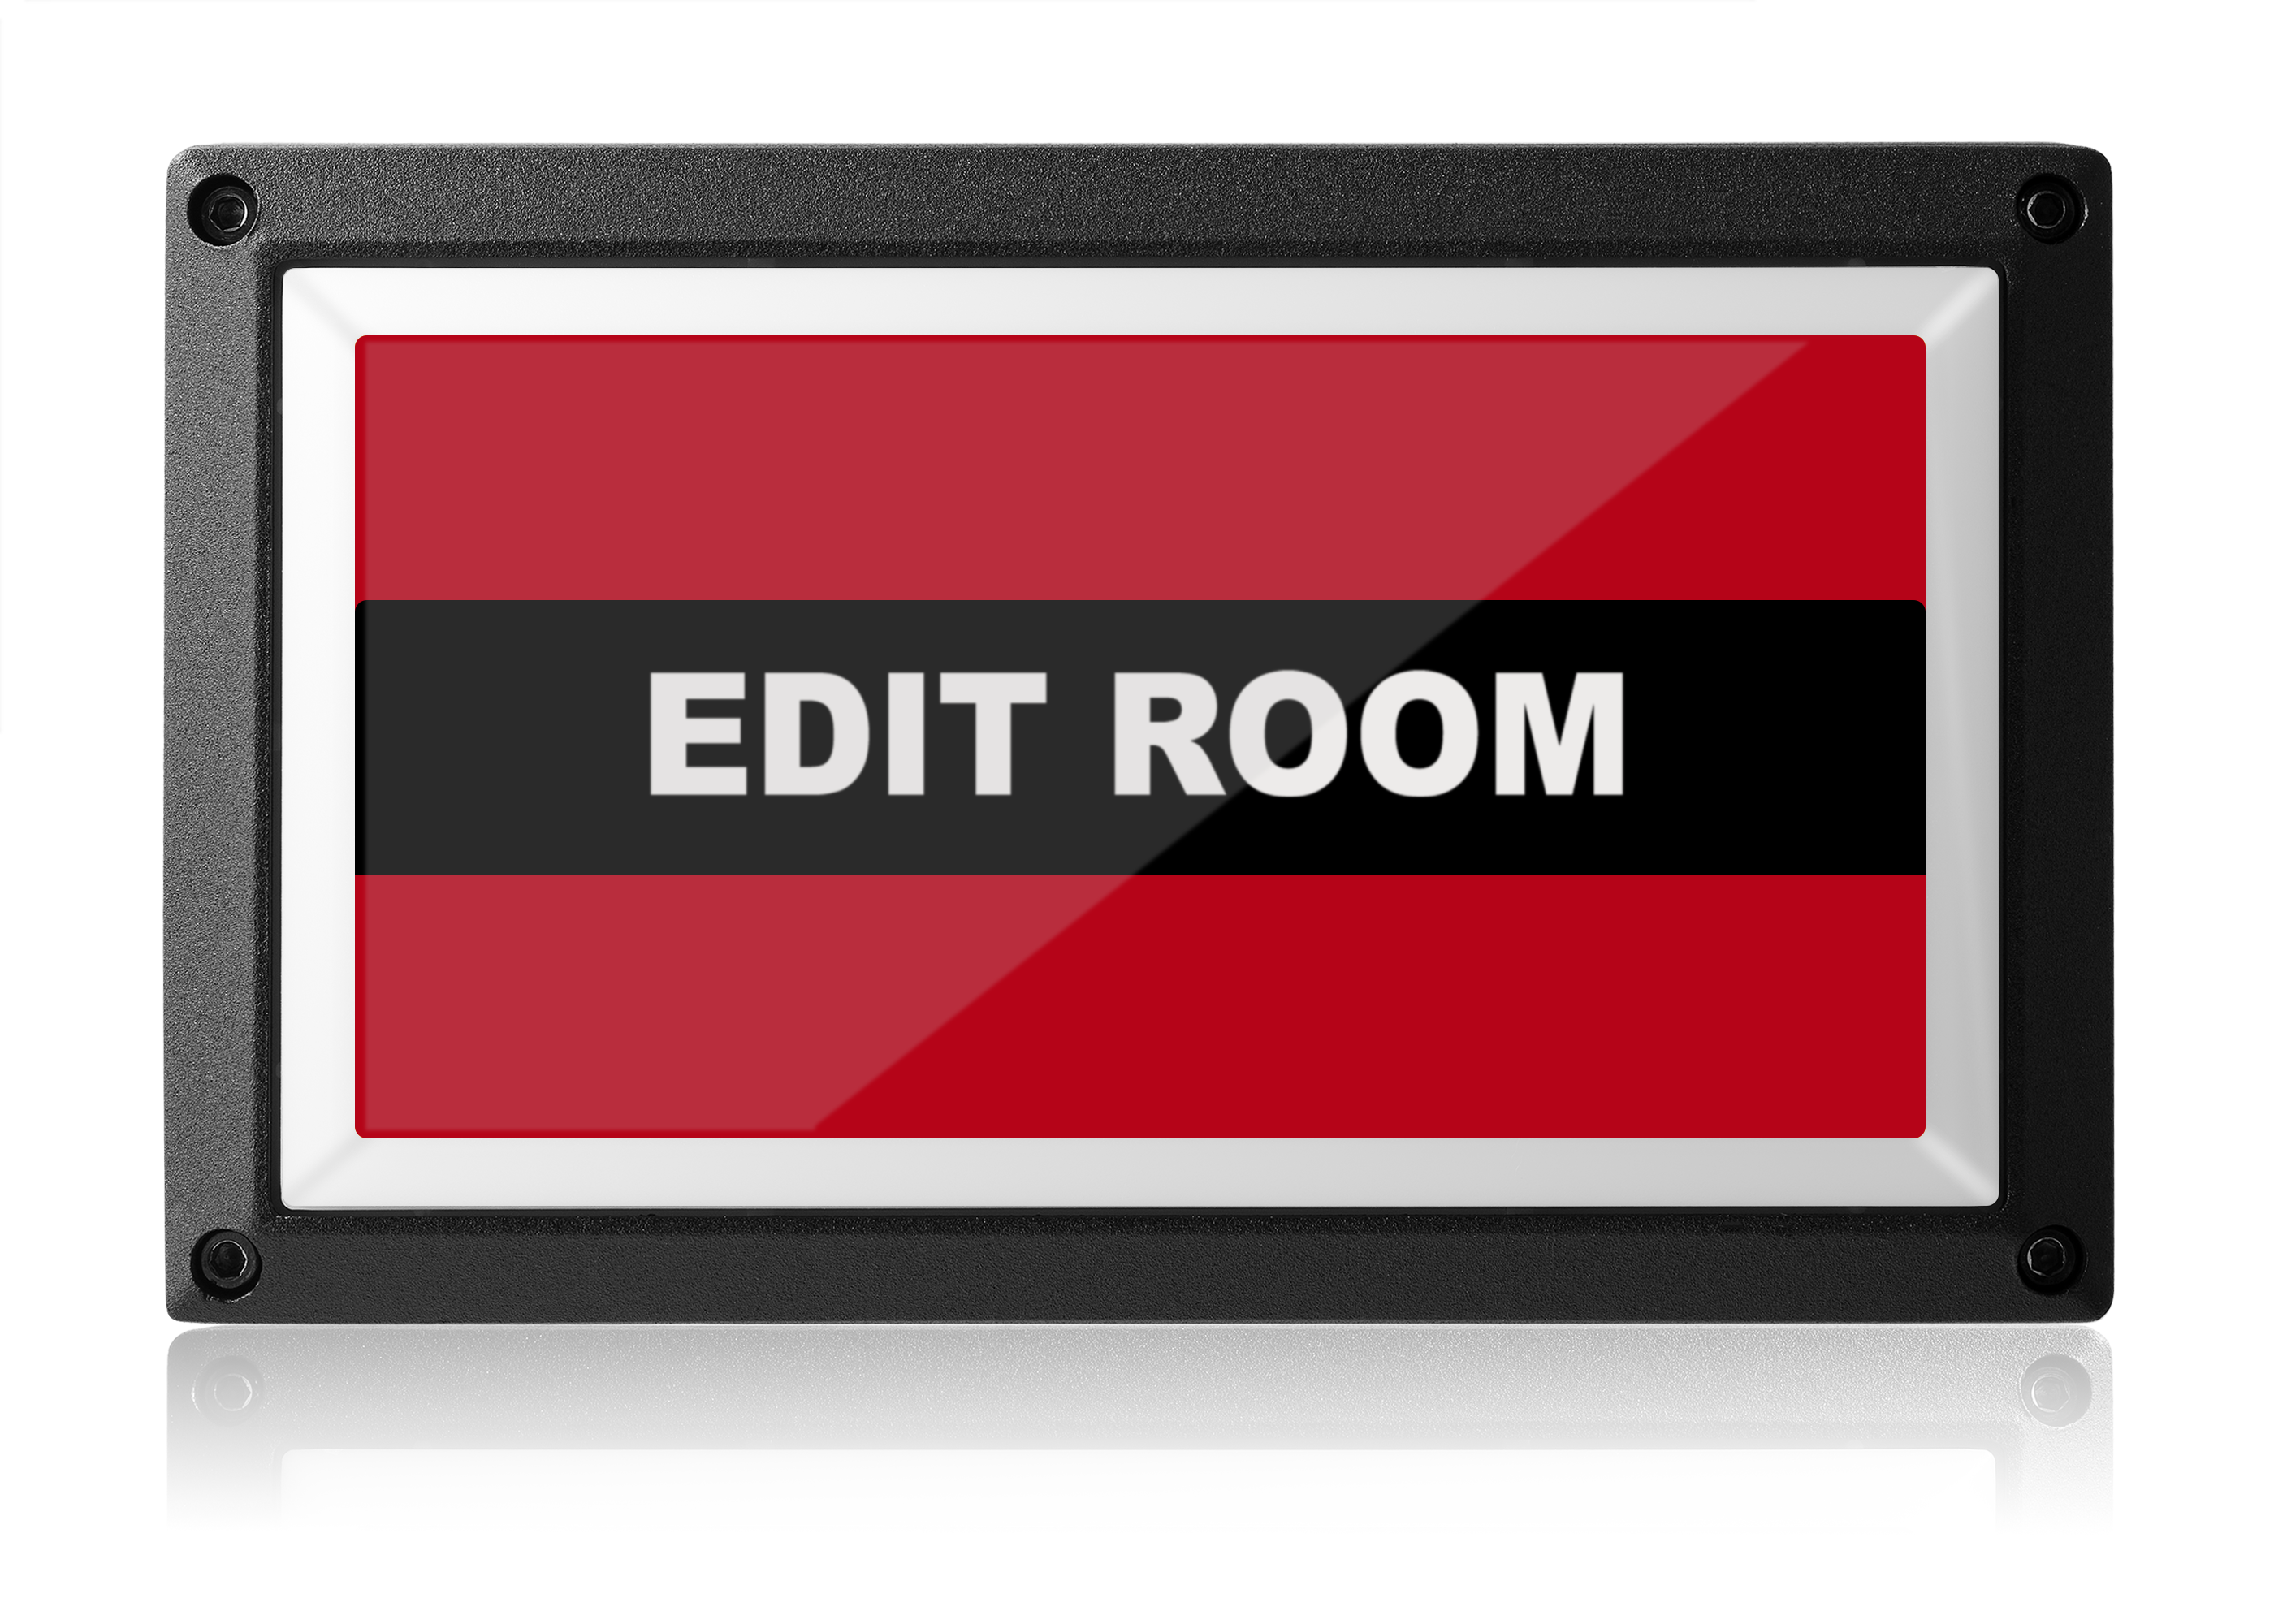 Edit Room Light - Red ISO - Rekall Dynamics LED Sign-Red-Low Voltage (12-24v DC)-